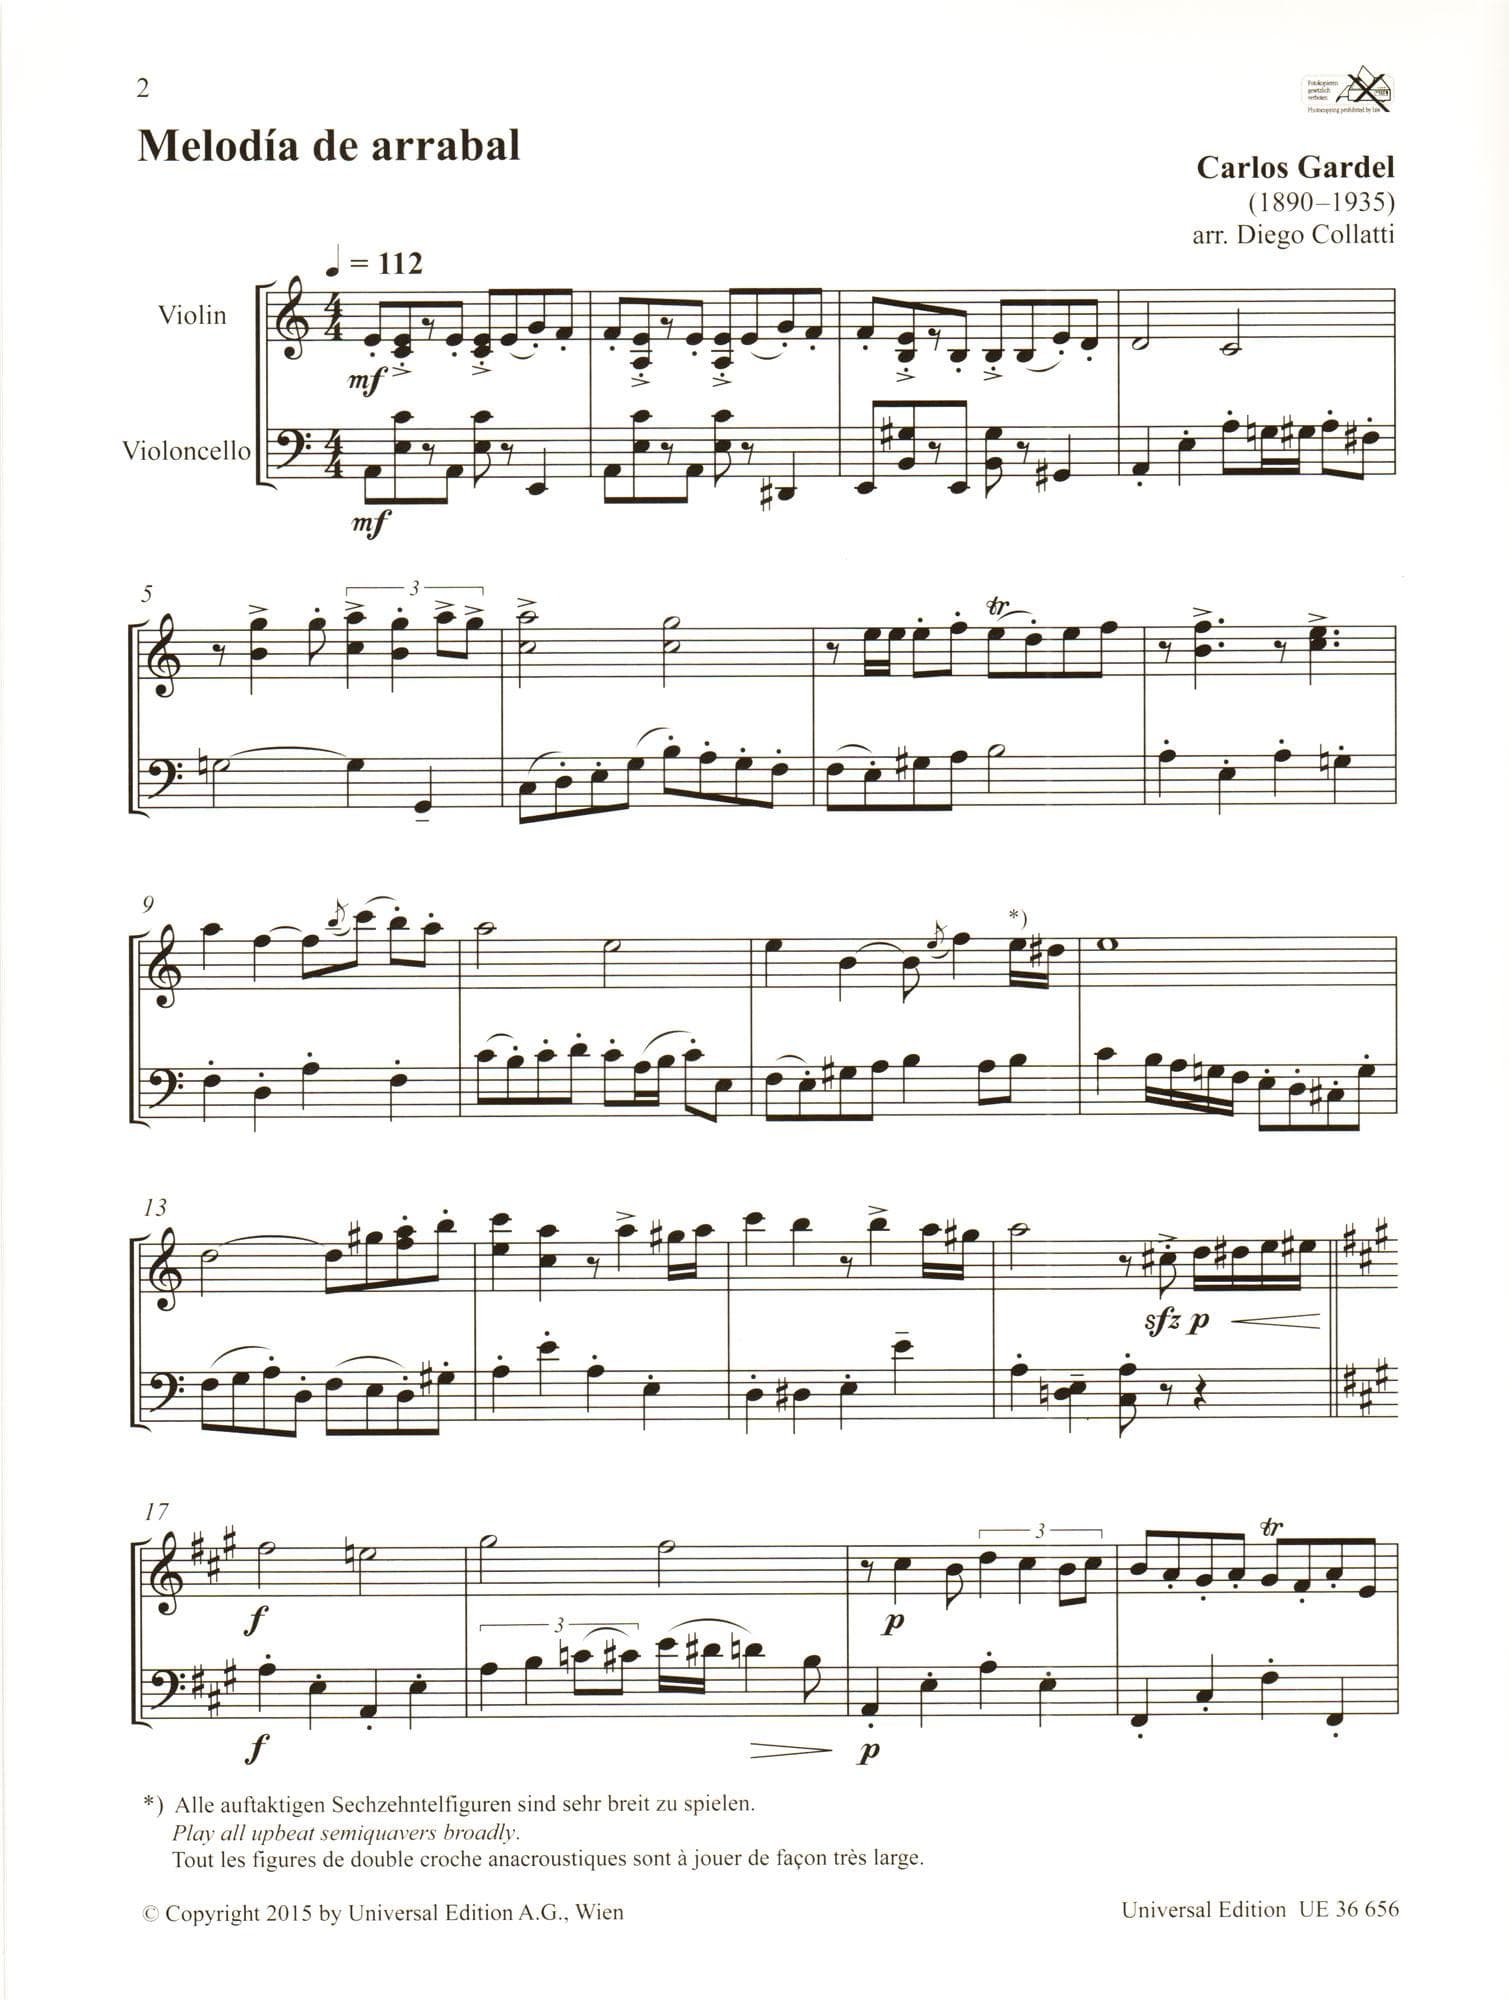 Carlos Gardel - Tango Duets - for Violin and Cello (or Viola) - arranged by Diego Collatti - Universal Edition